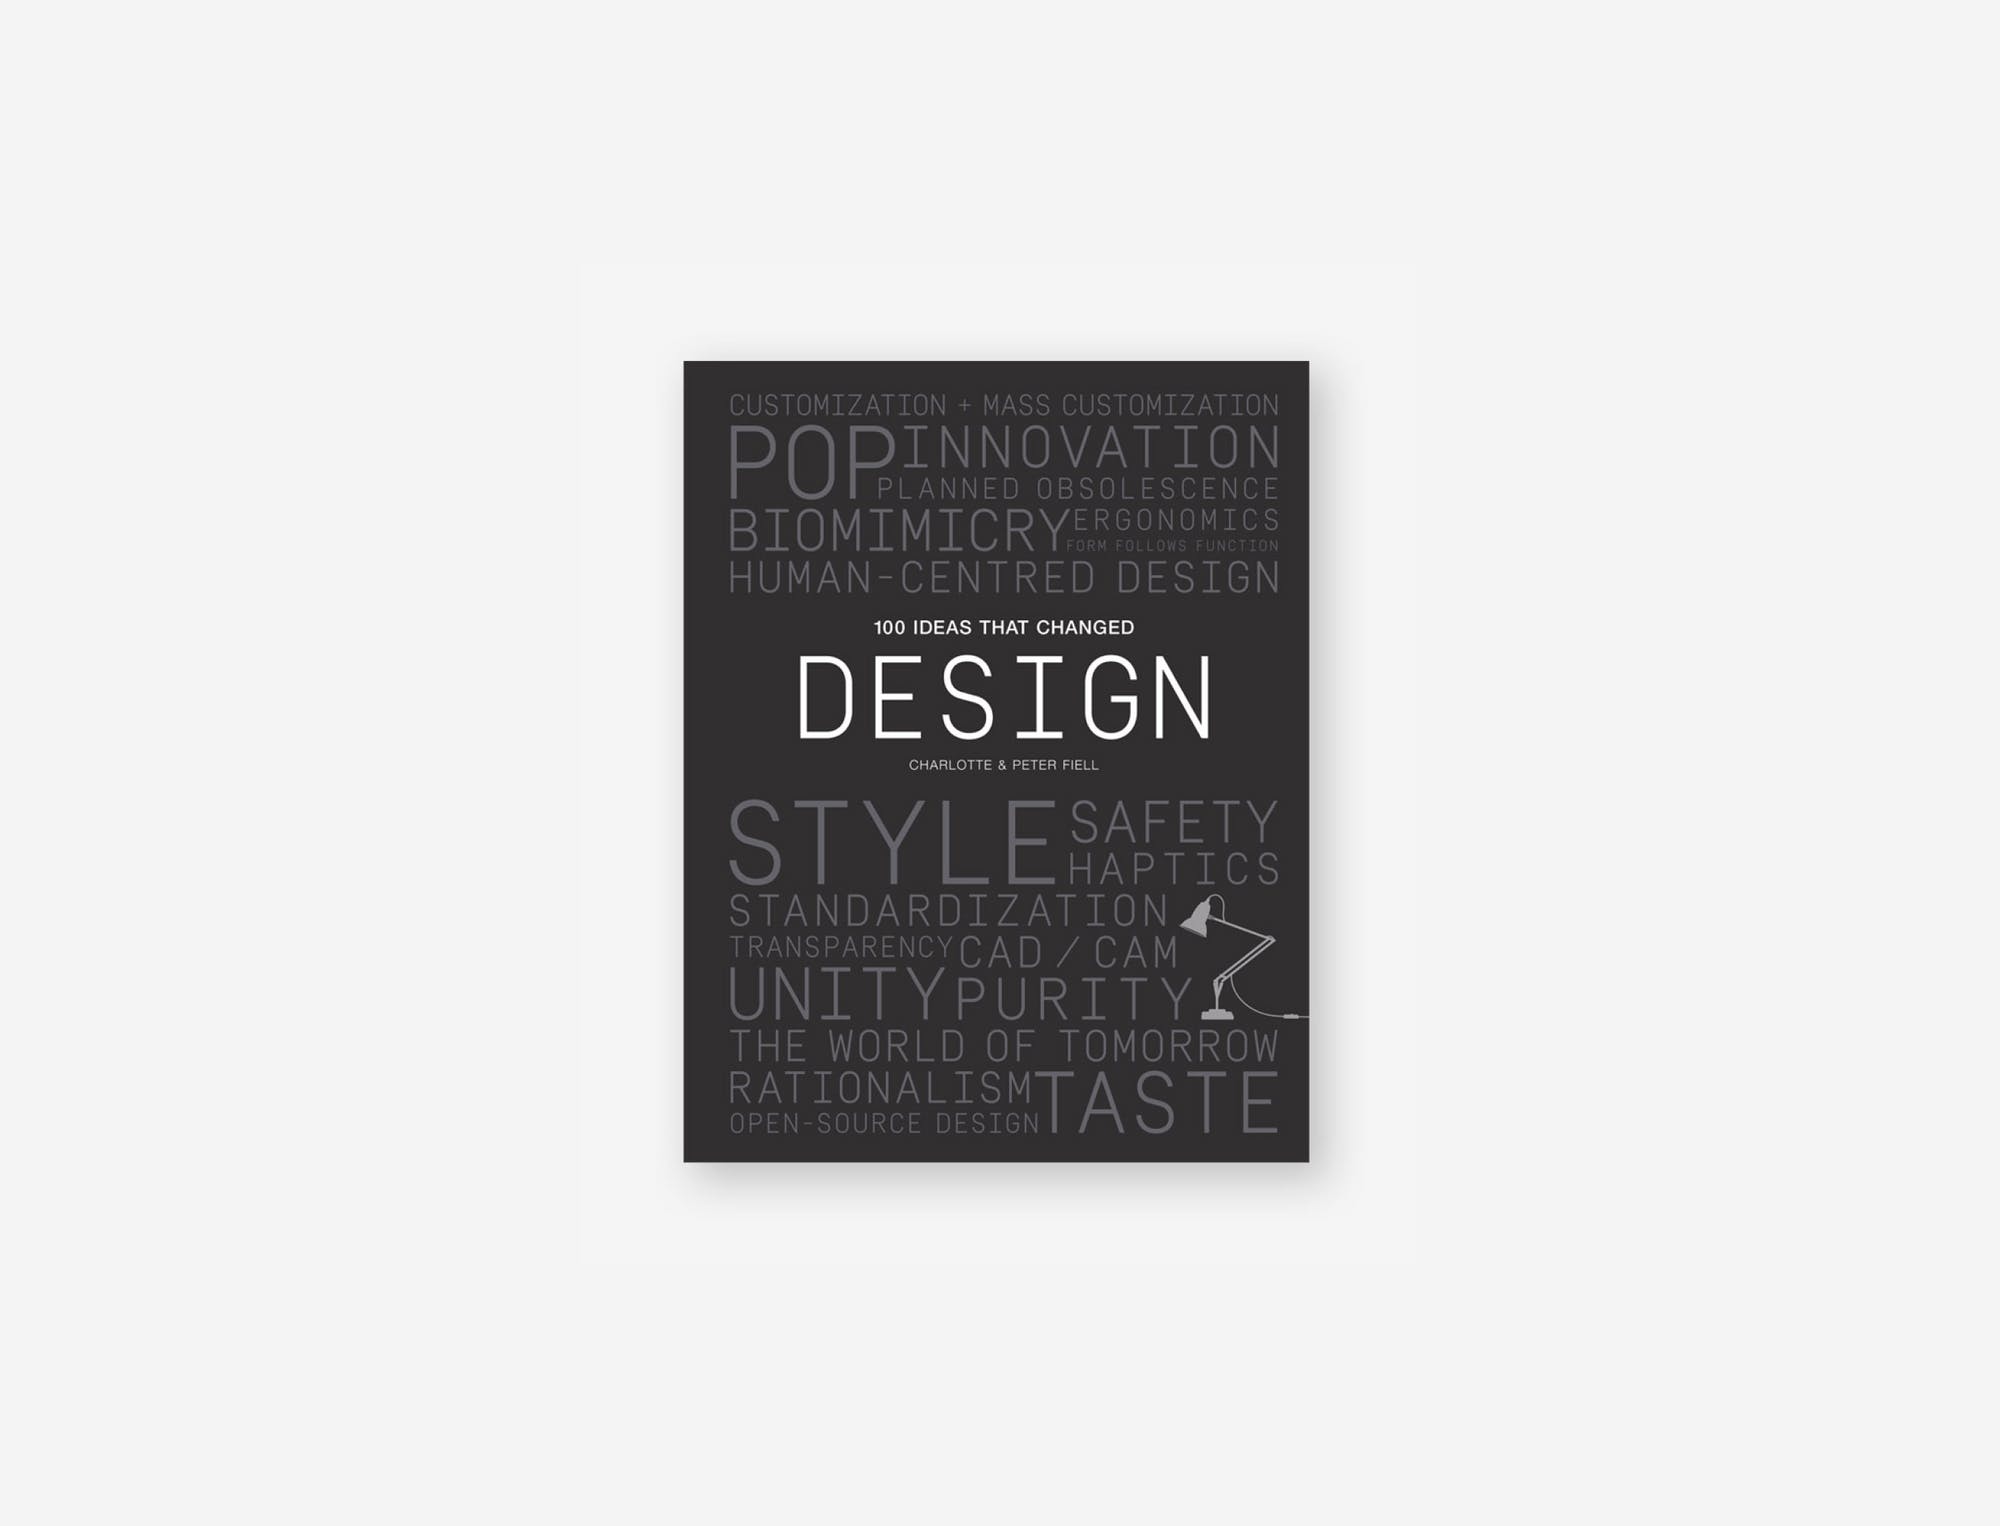 100 Ideas That Changed Design book